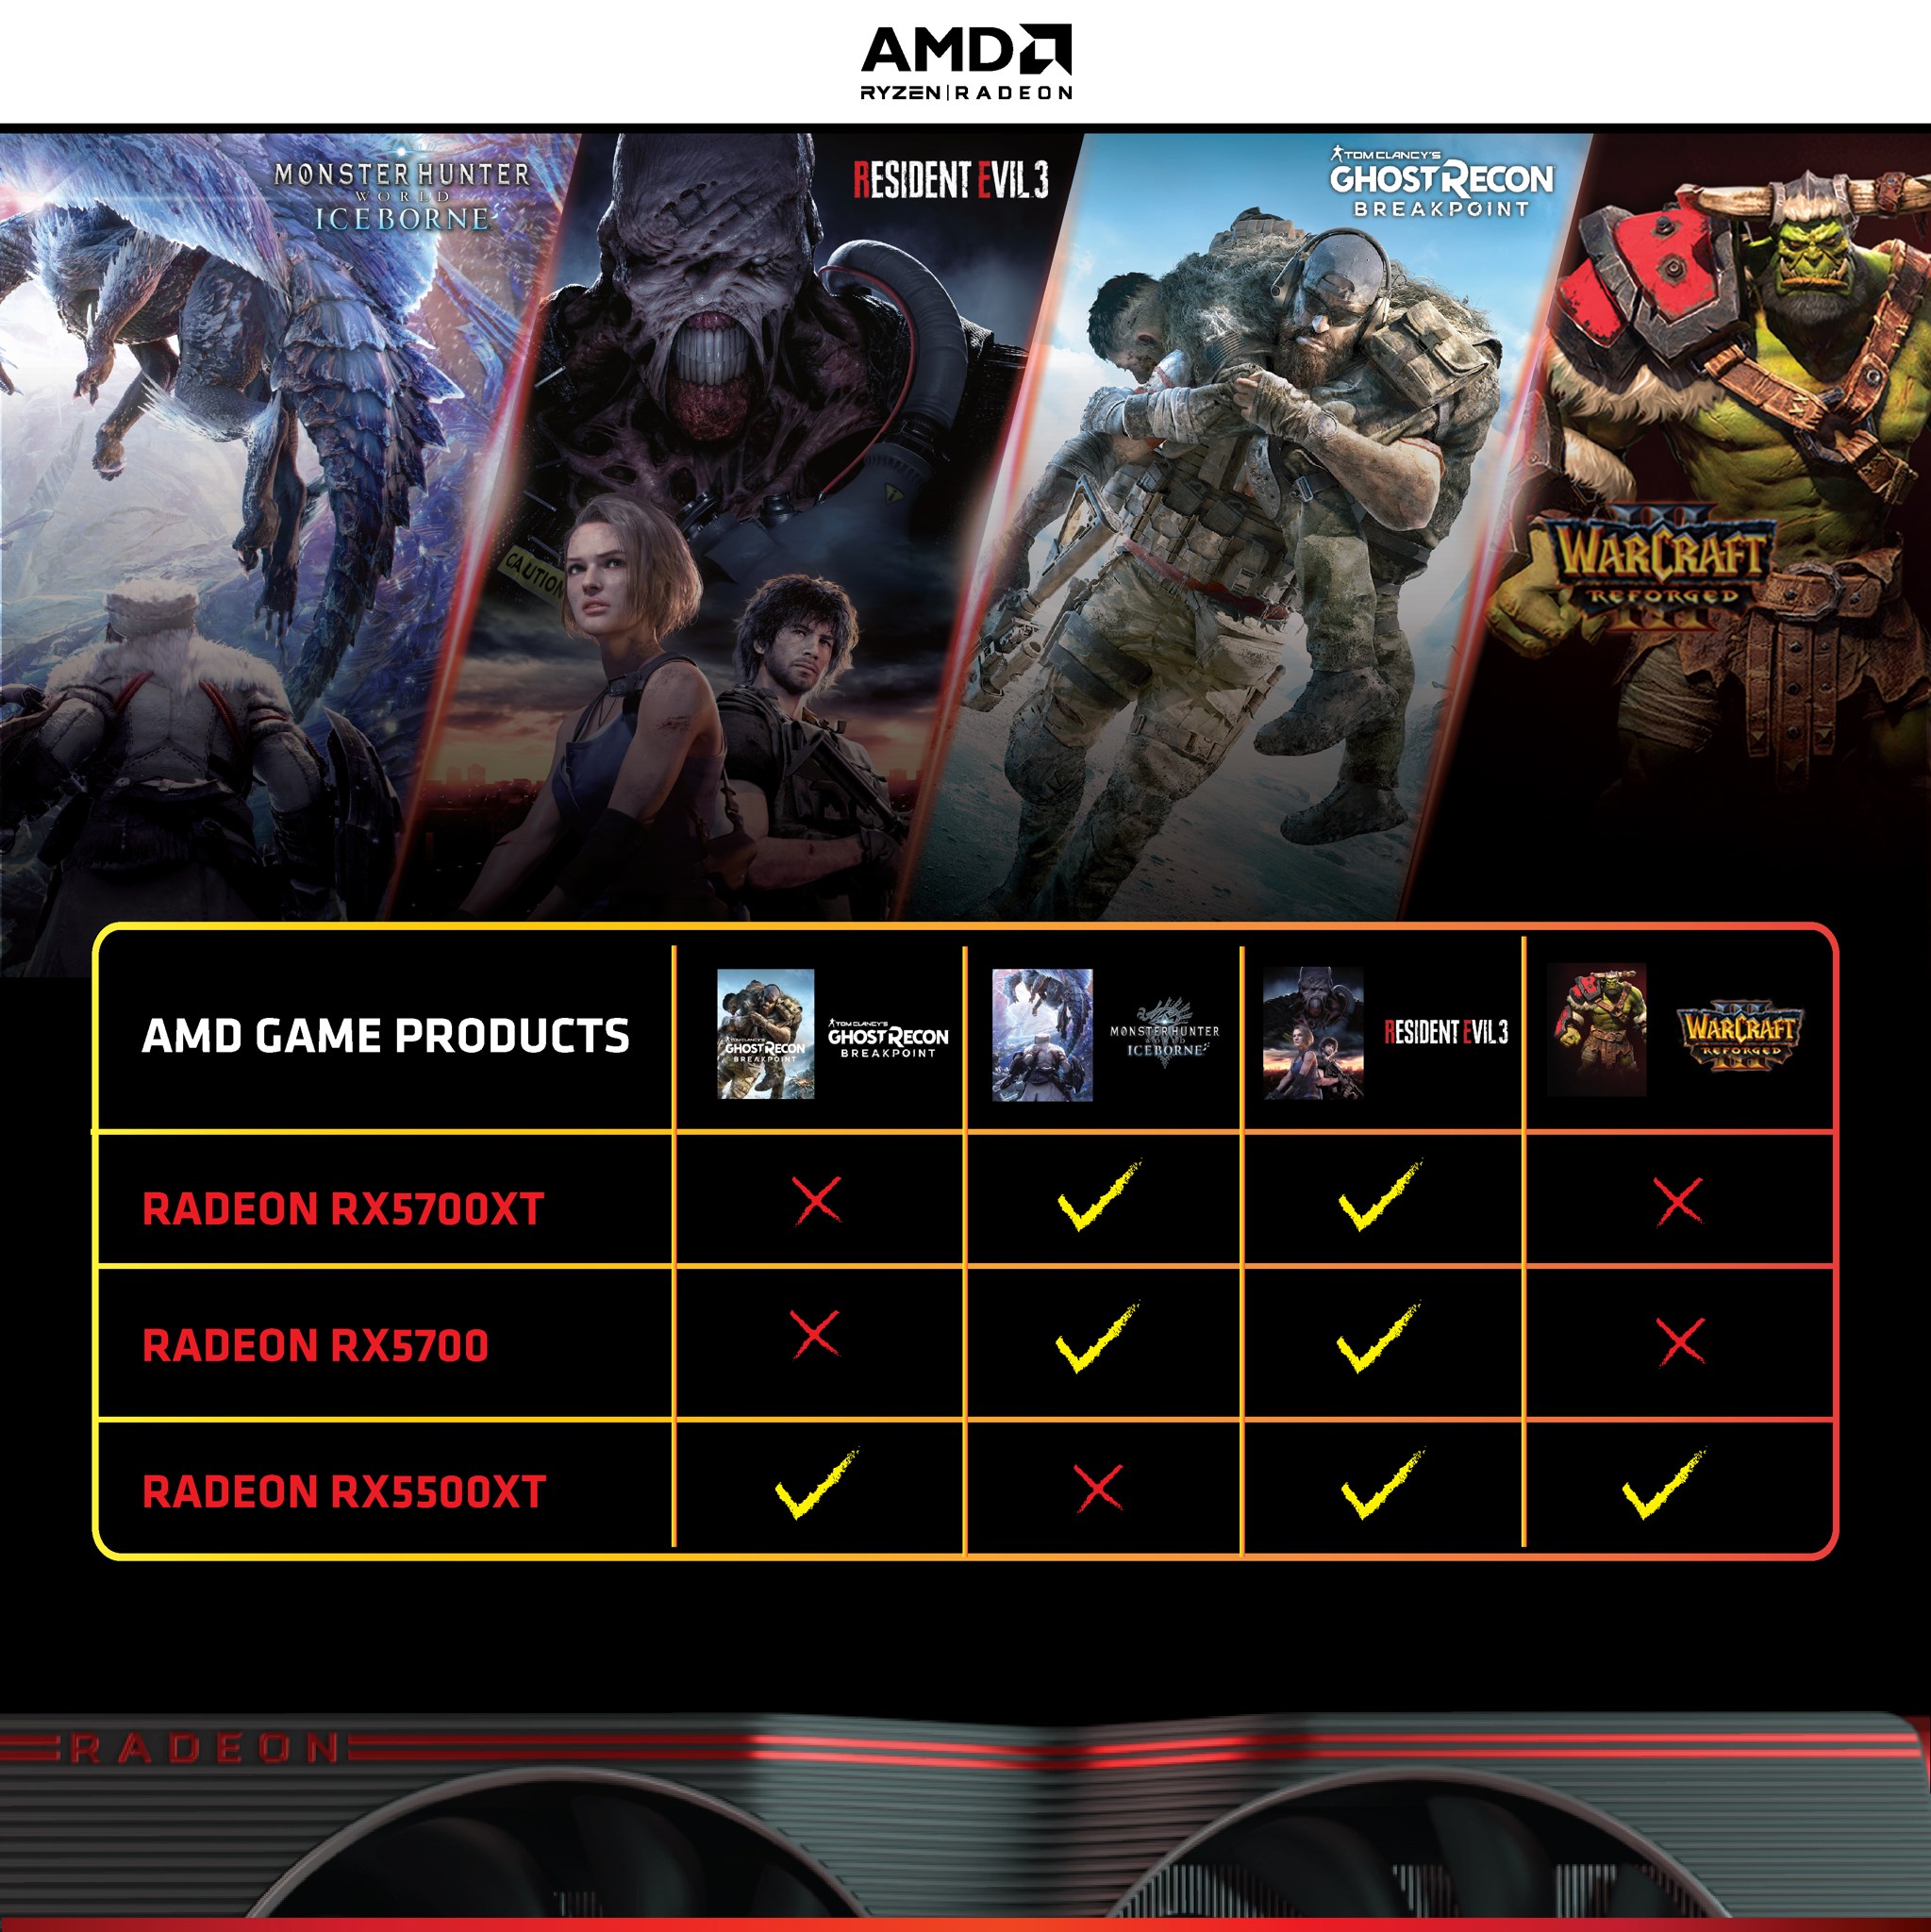 promotion 2 AMD มีโปรโมชั่นสำหรับ End user ที่ซื้อการ์ดจอที่ร่วมรายการ RX5500XT และ RX5700XT   RX 5700 ภายในวันที่ 1 กุมภาพันธ์   29 กุมภาพันธ์เป็นต้นไป แลกรับเกมสูงสุดถึง 3 เกมส์ อาทิเช่น Ghost recon breakpoint , Monster Hunter world   Icebone   Resident Evil 3